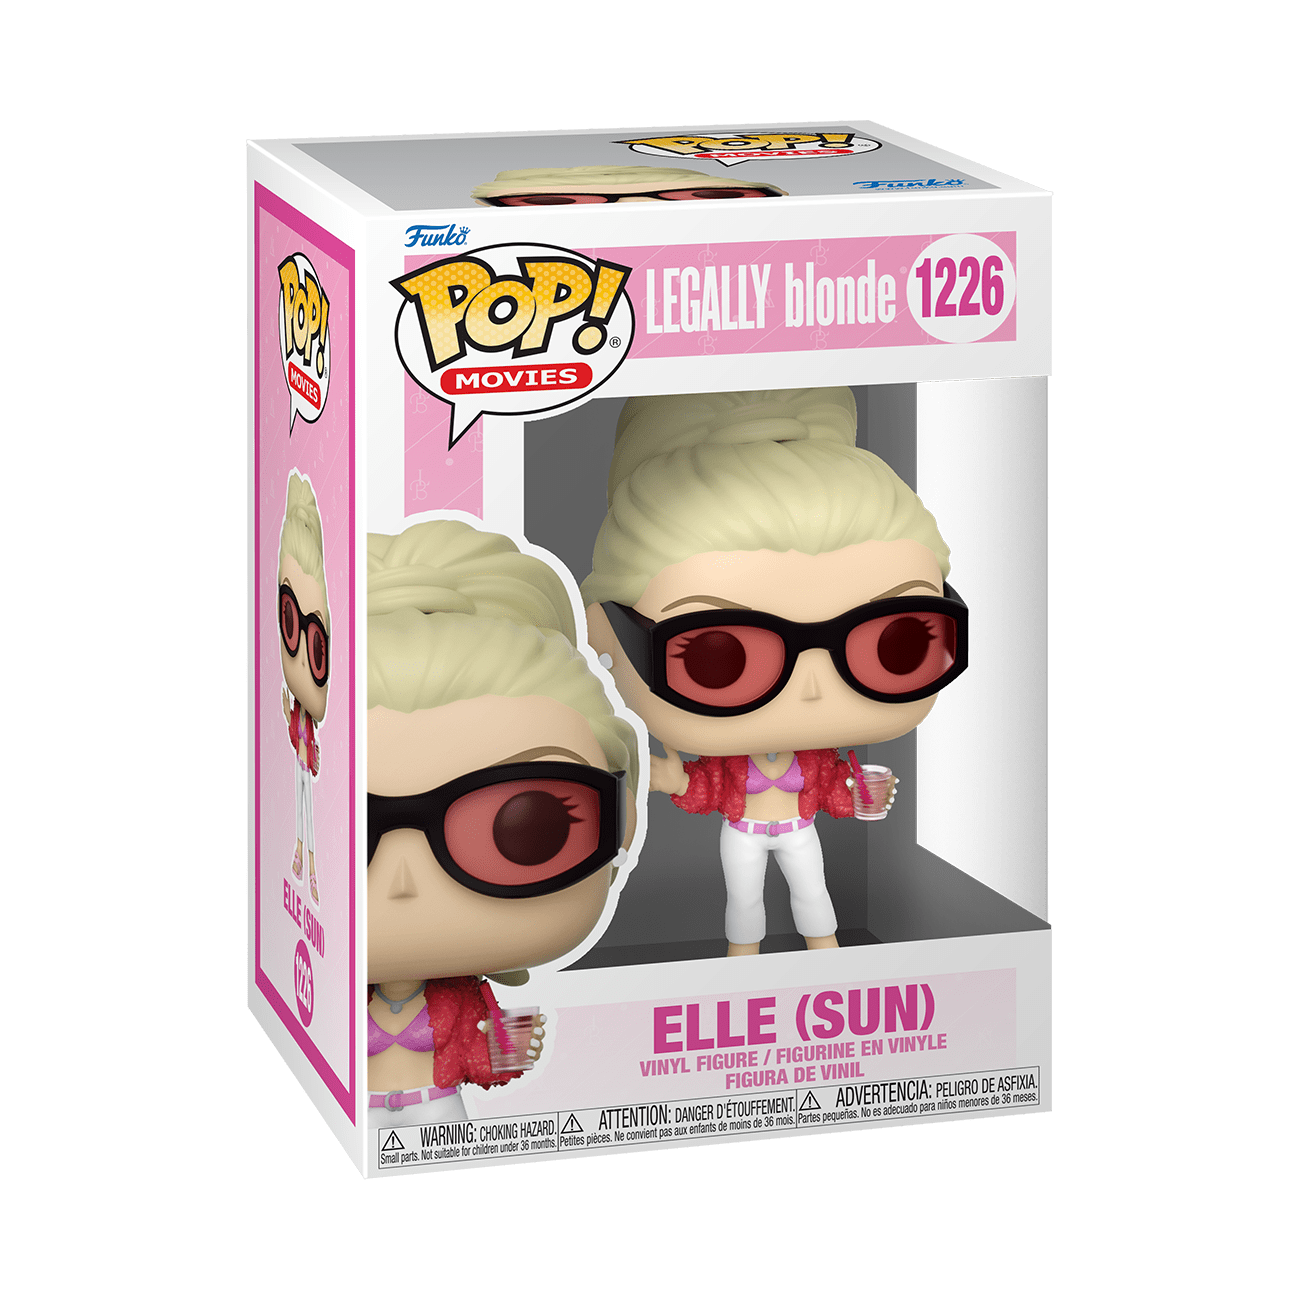 Funko Pop Movies: Legally Blonde - Elle Sun